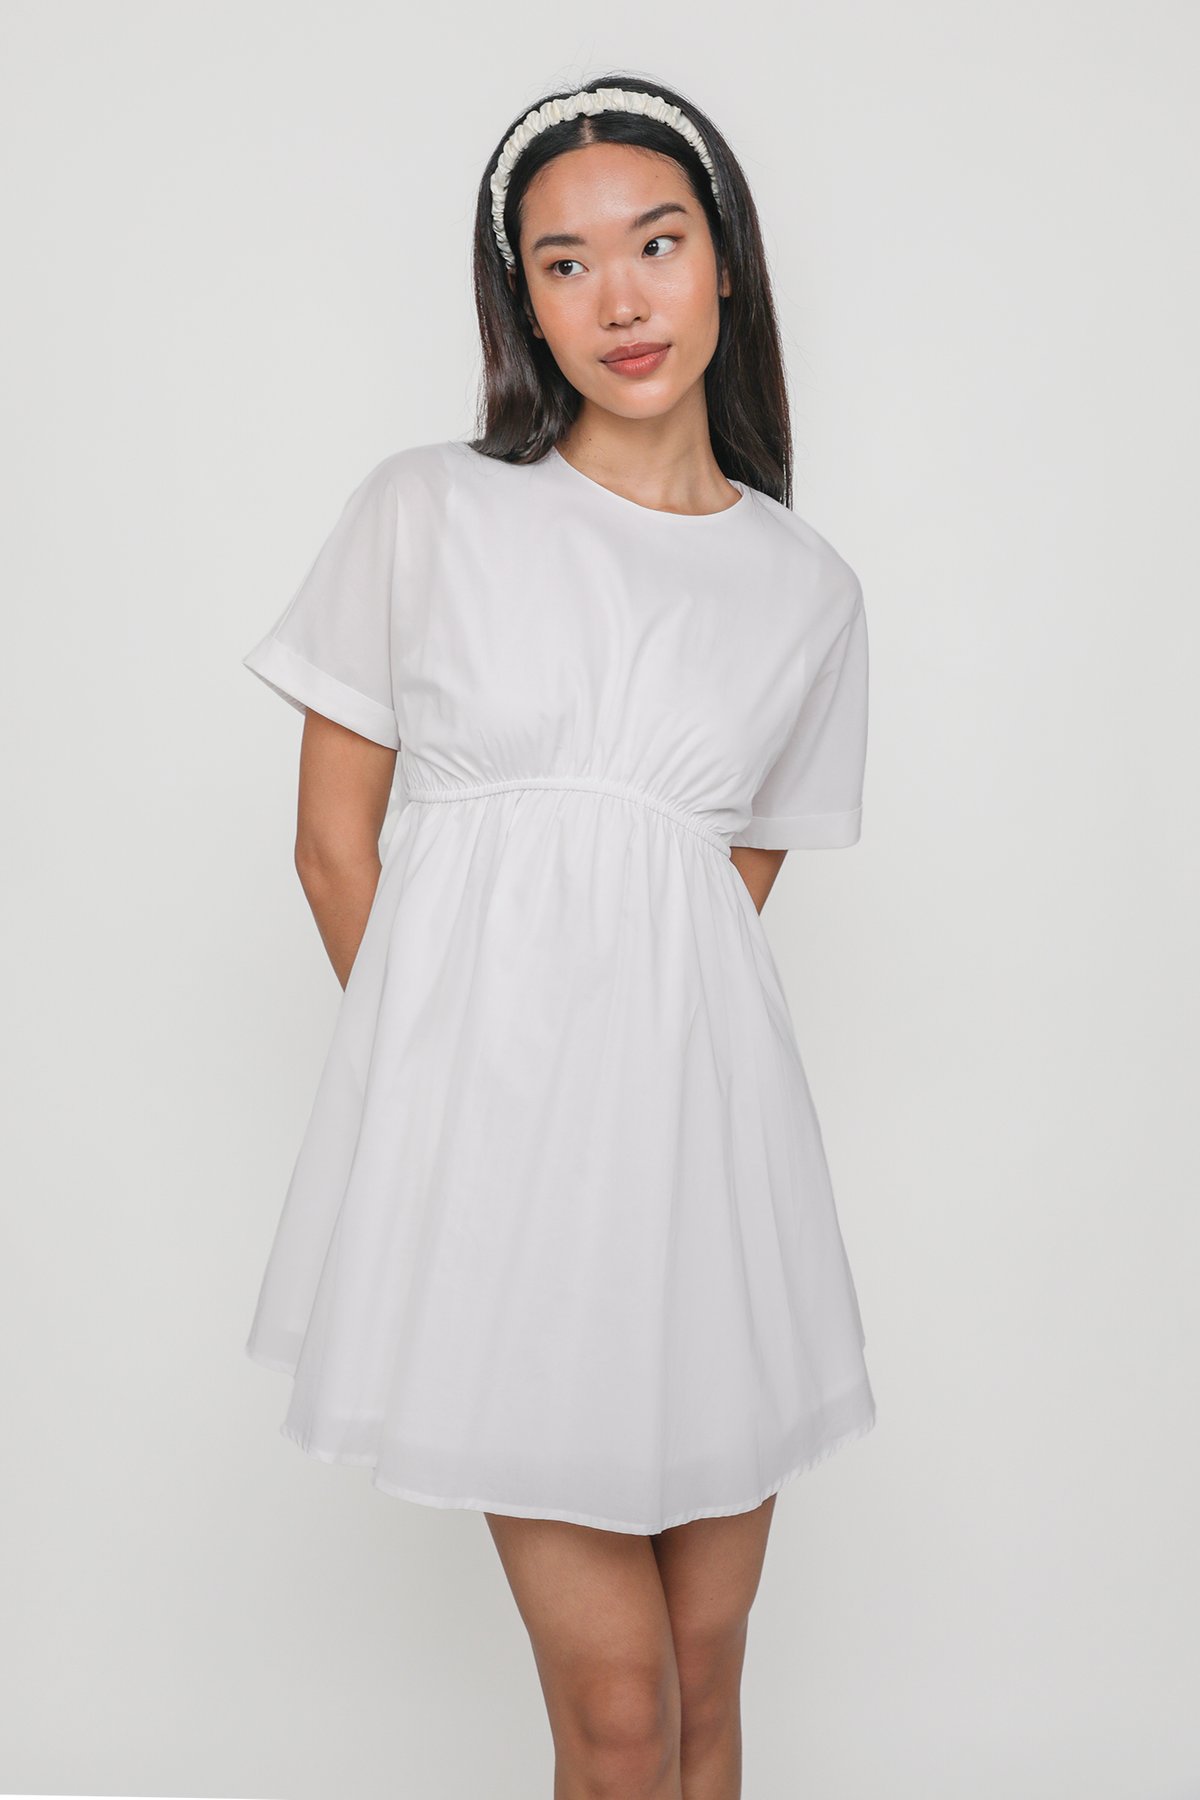 Mindy Cuffed Sleeve Babydoll Dress (White)